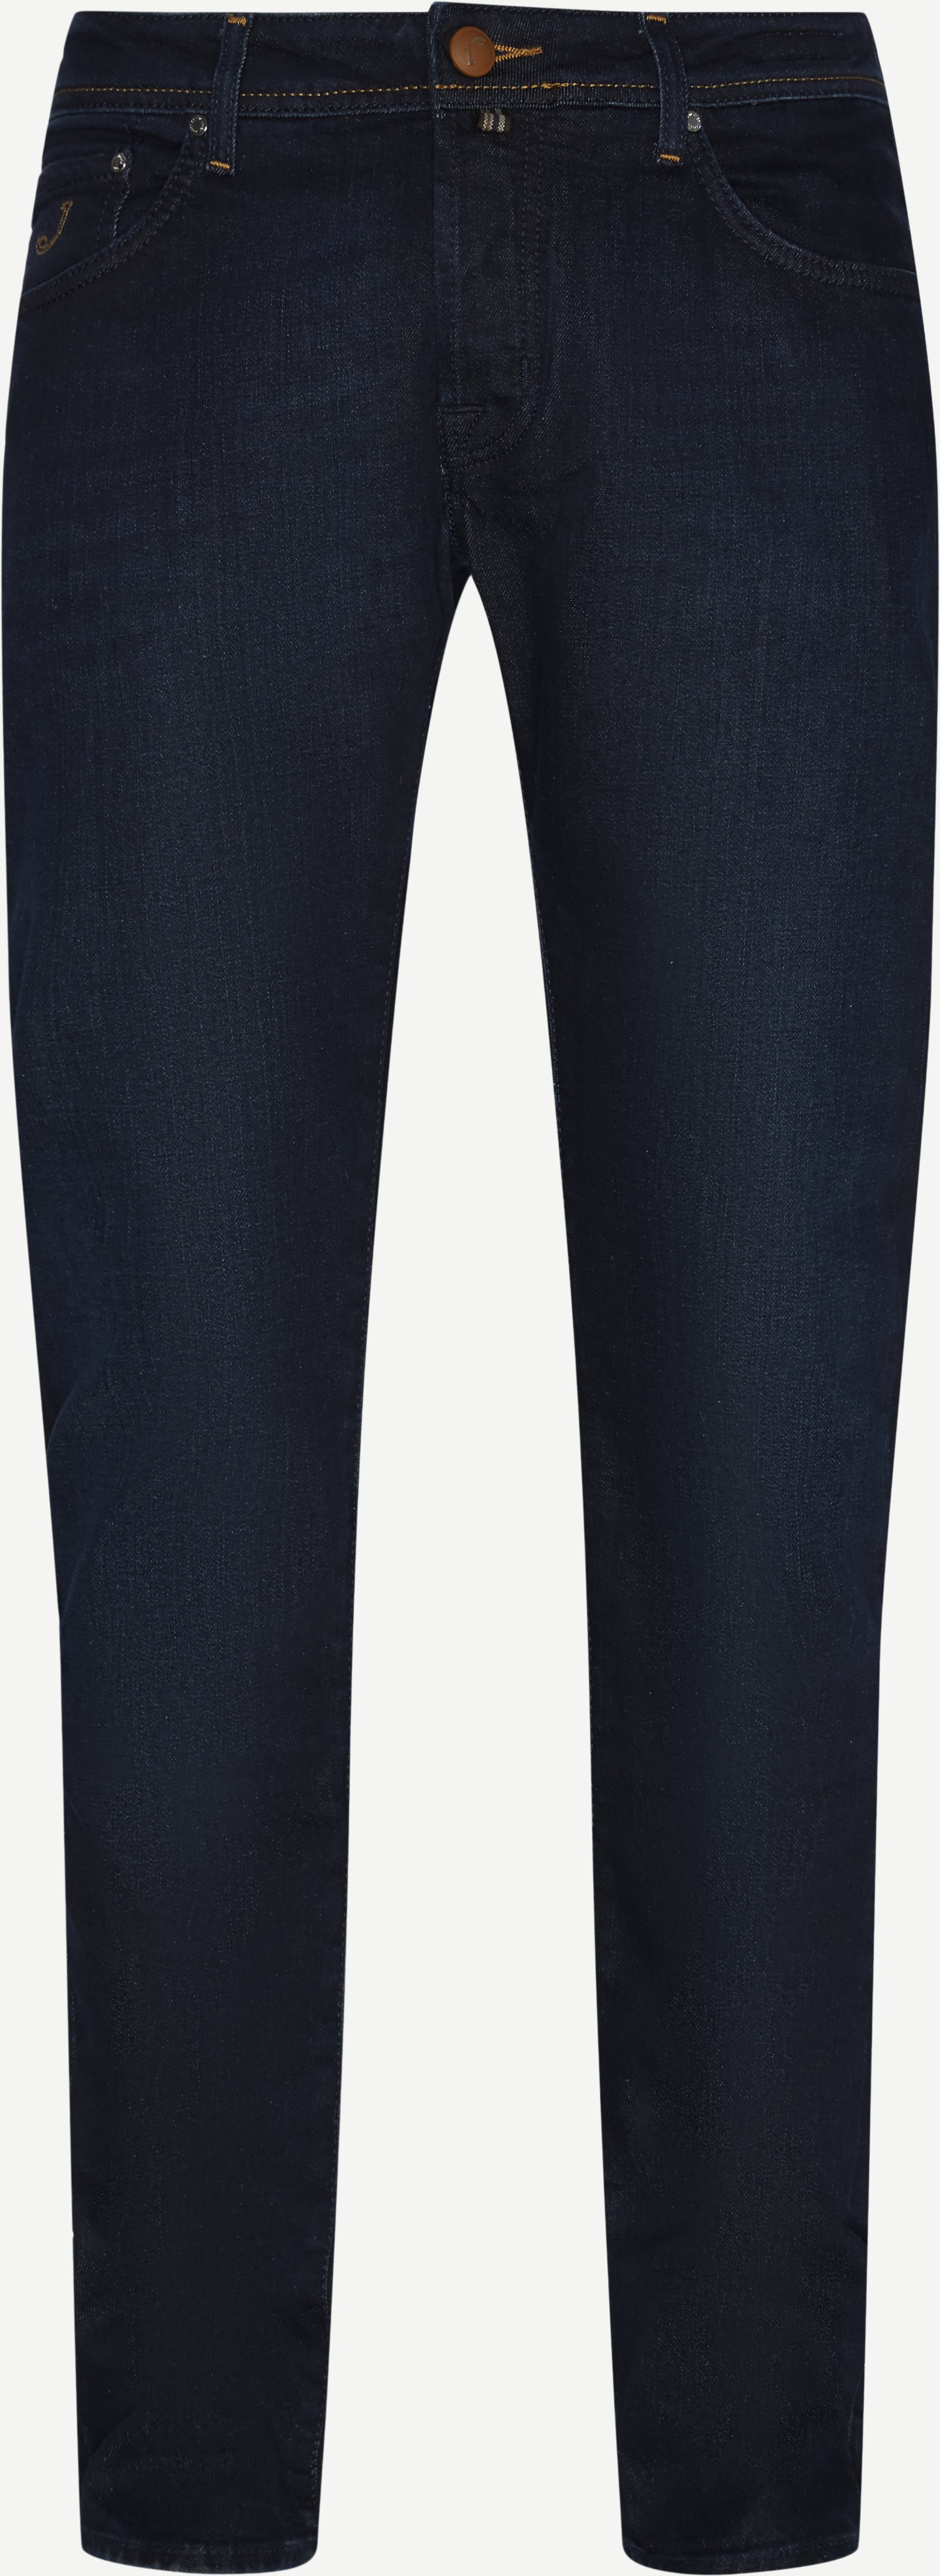 J622 Handmade Tailored Jeans - Jeans - Slim fit - Denim